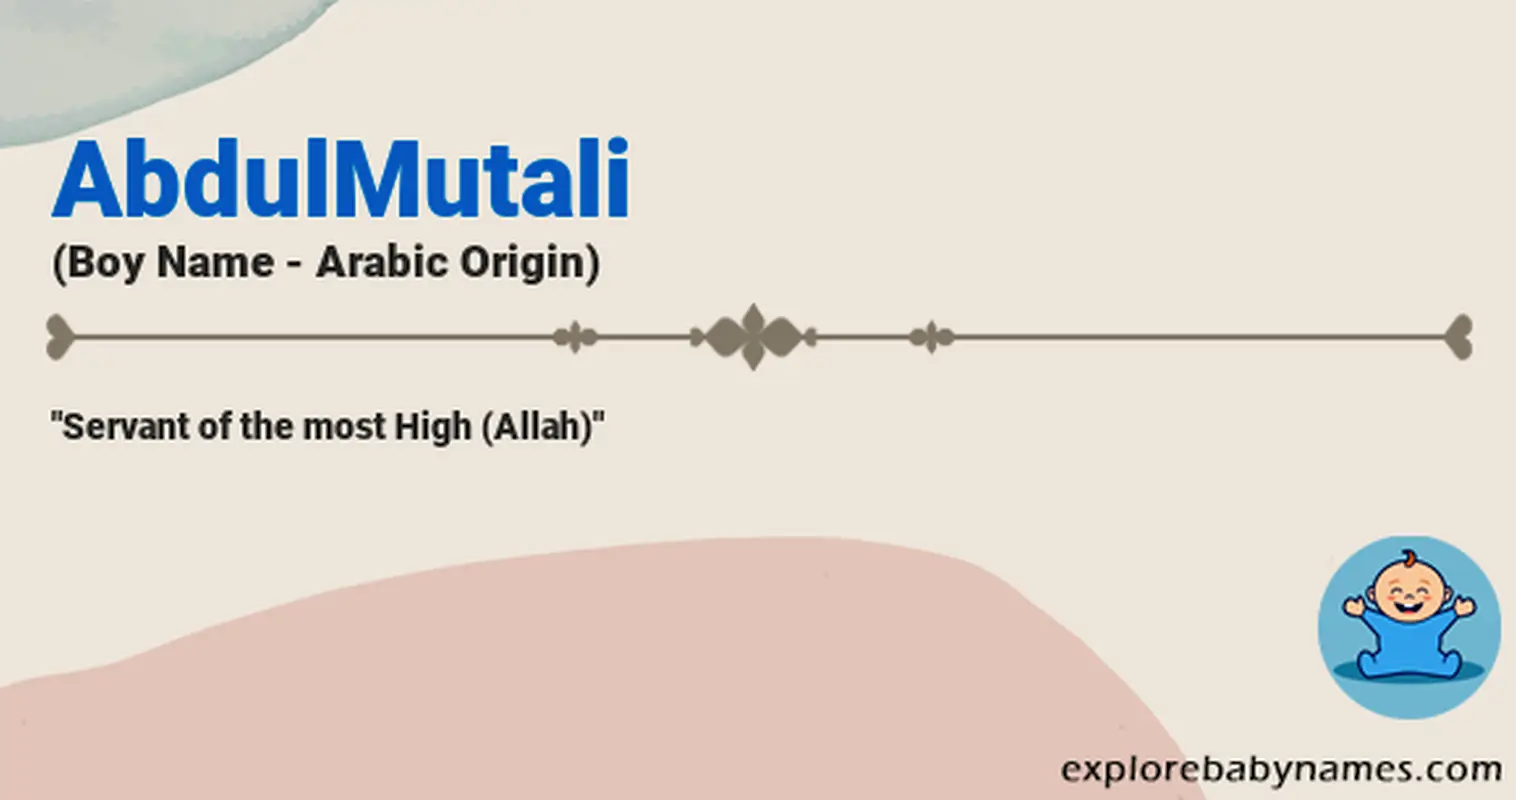 Meaning of AbdulMutali